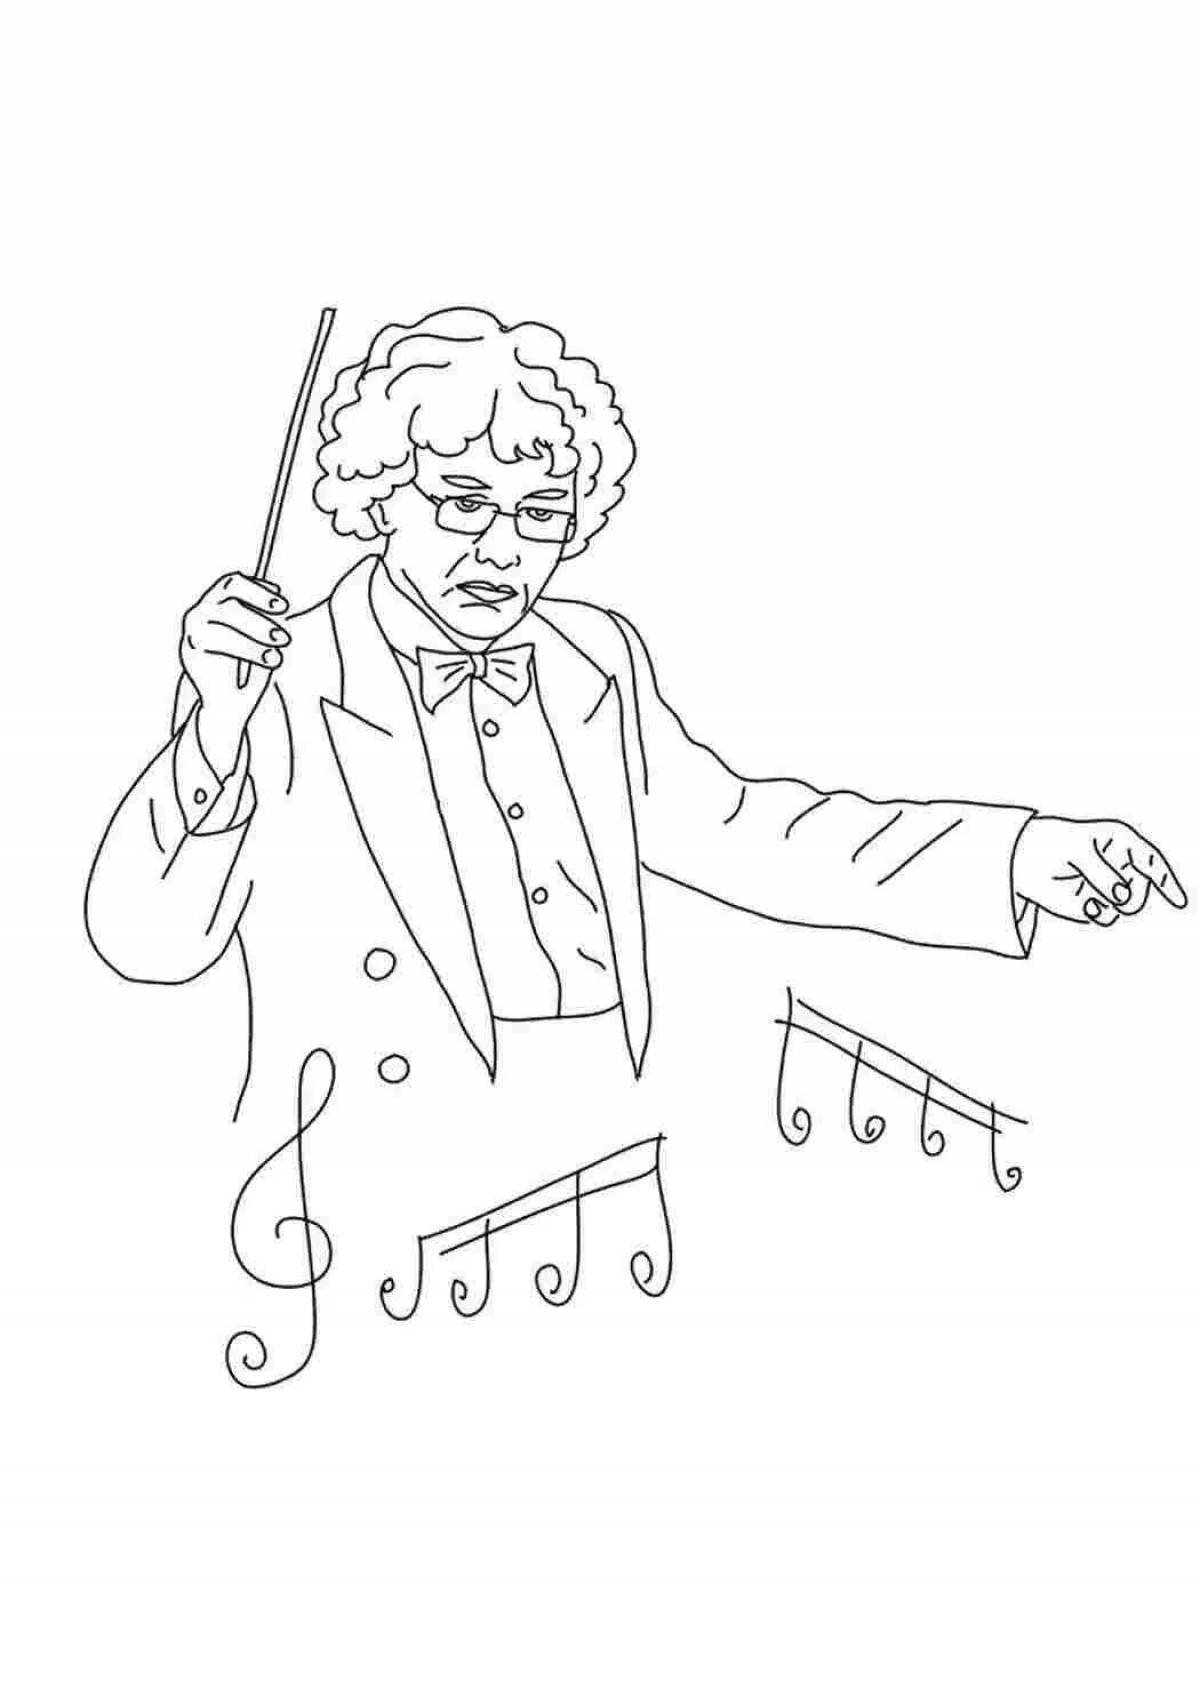 Coloring balanced conductor